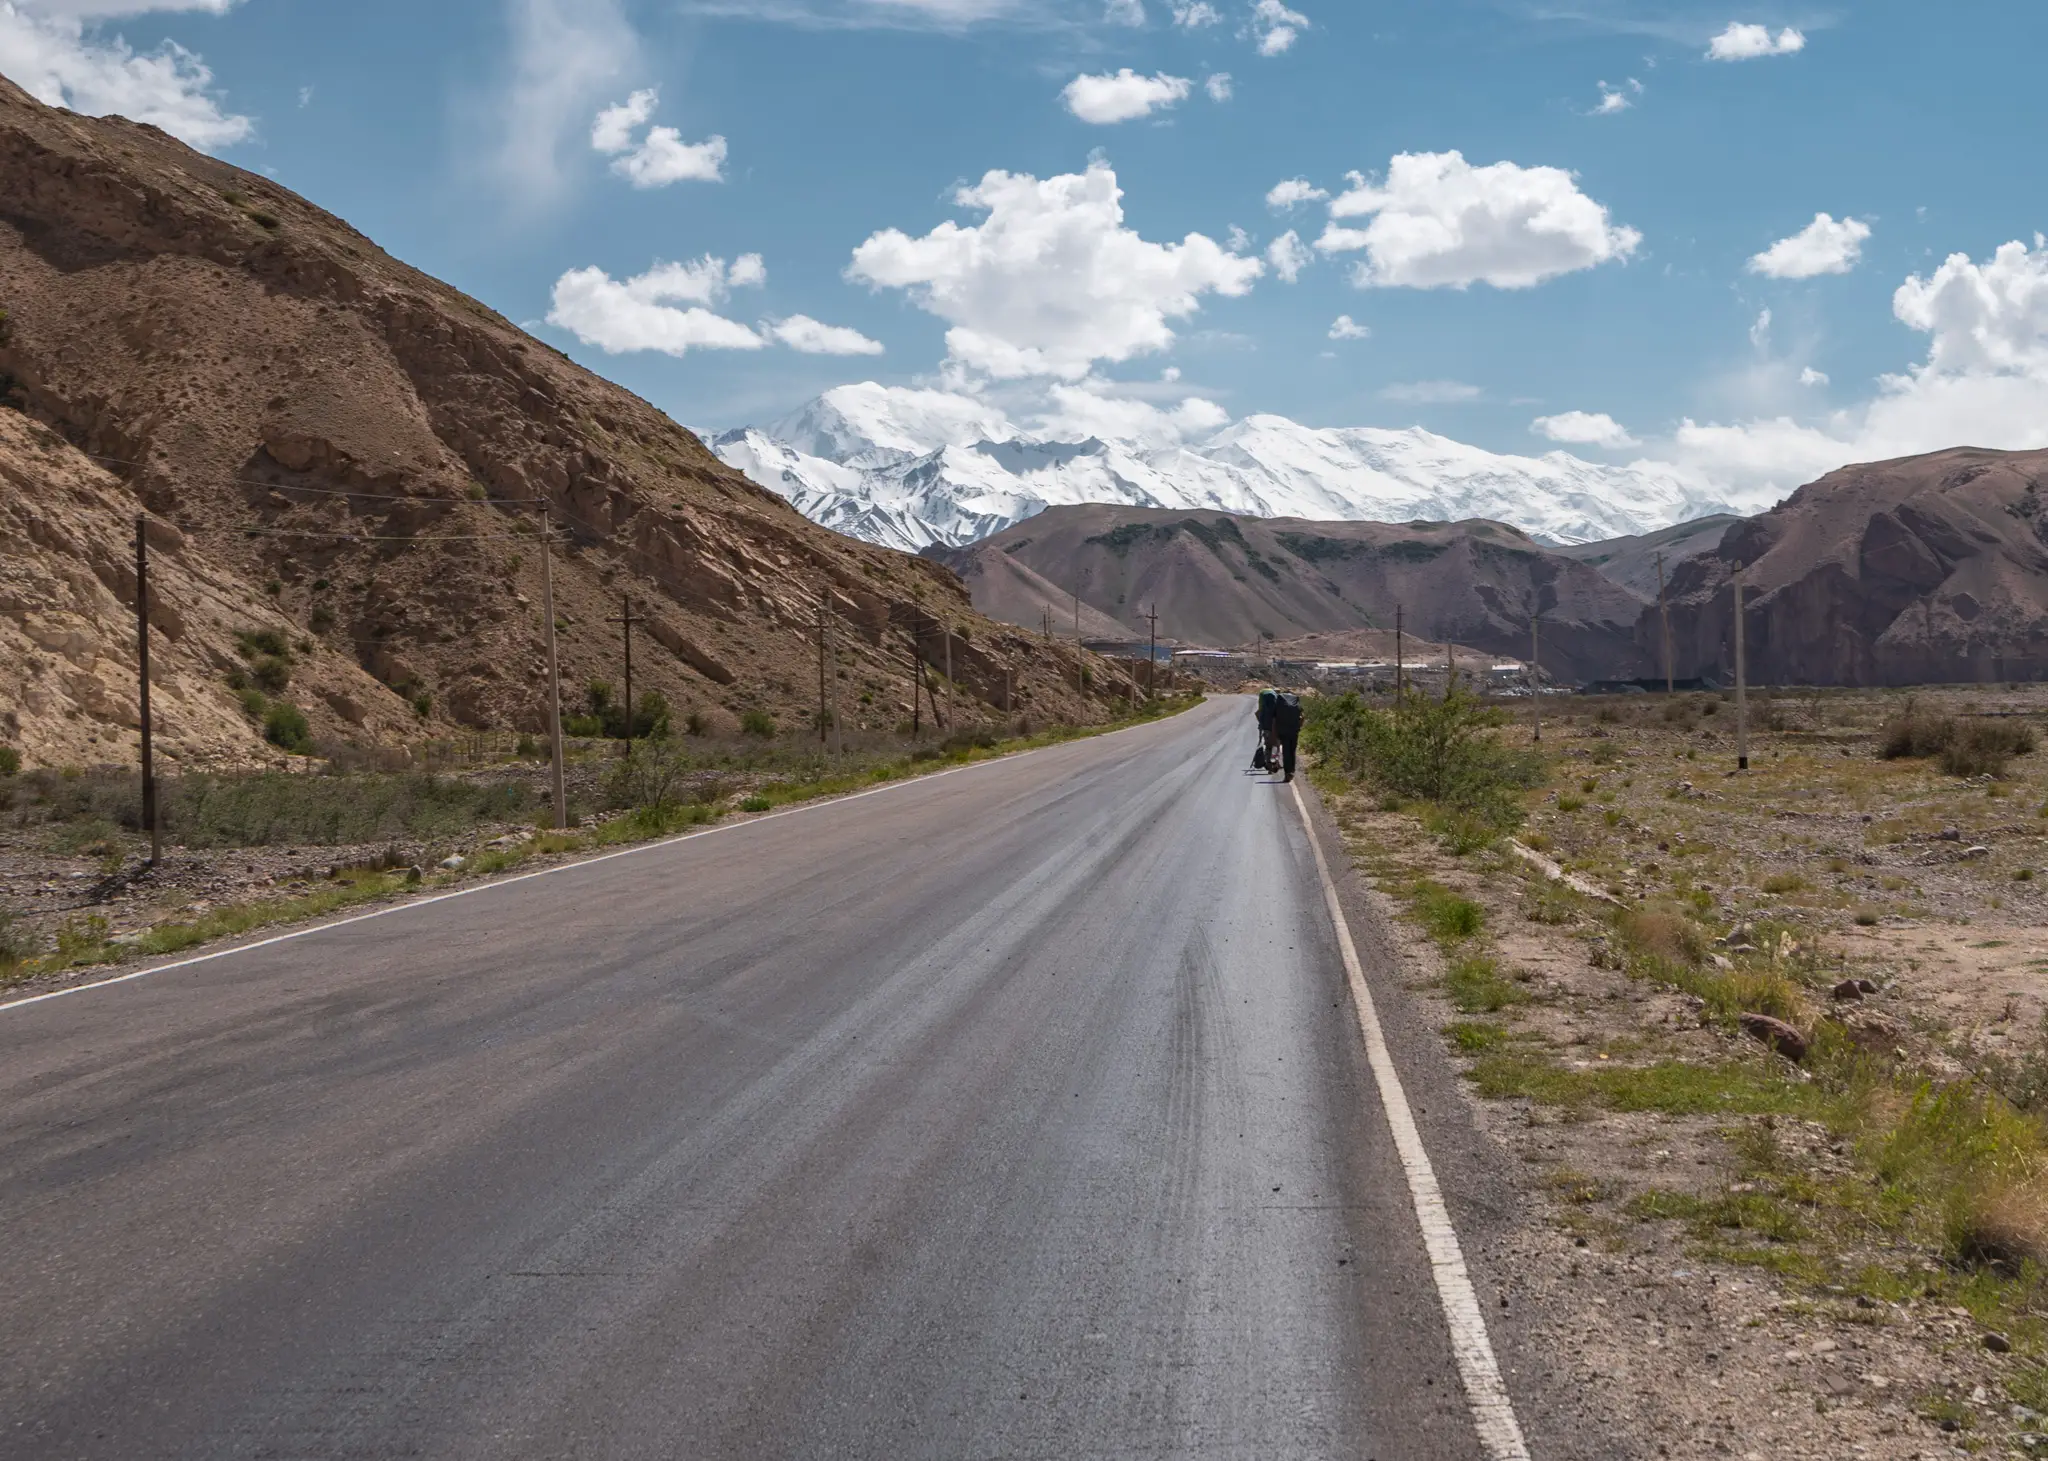 Walking across No Man's Land at the Irkeshtam Pass border crossing between China and Kyrgyzstan